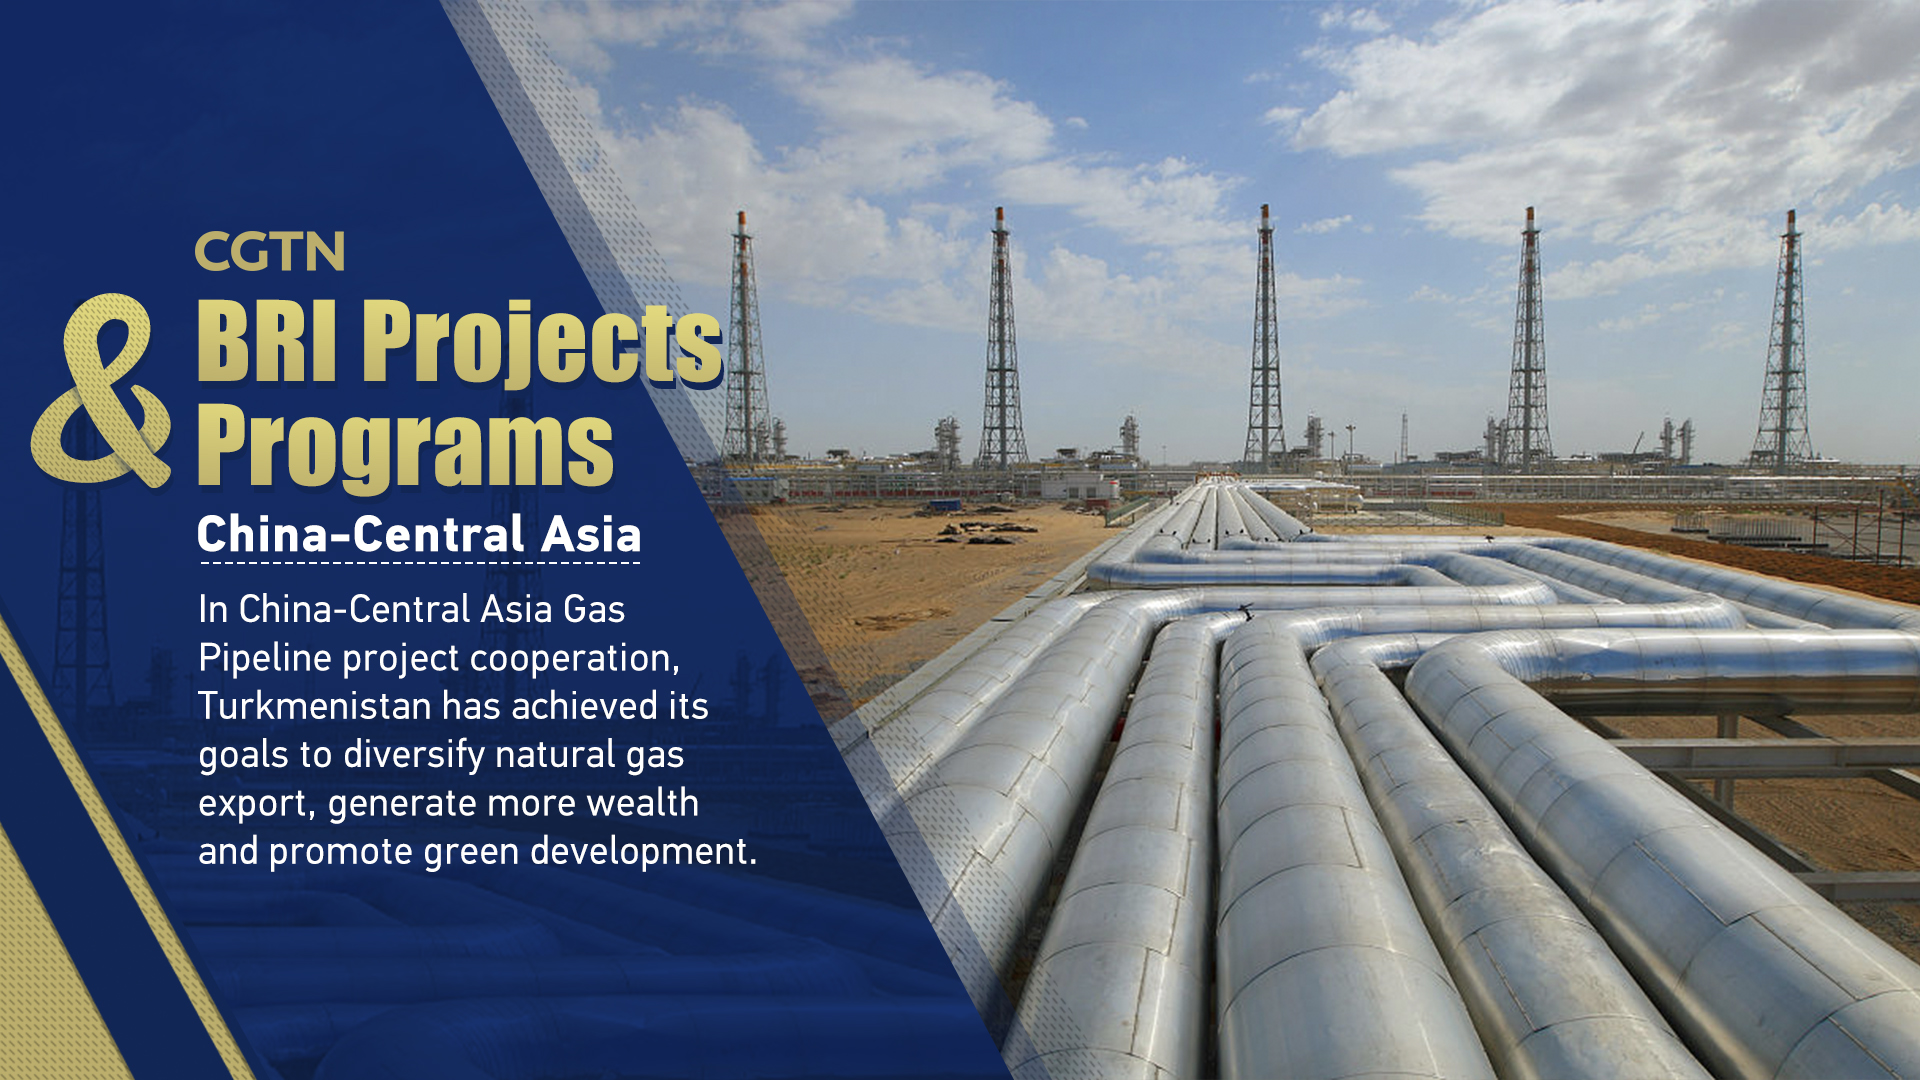 China-Central Asia: Turkmenistan gas promotes green development